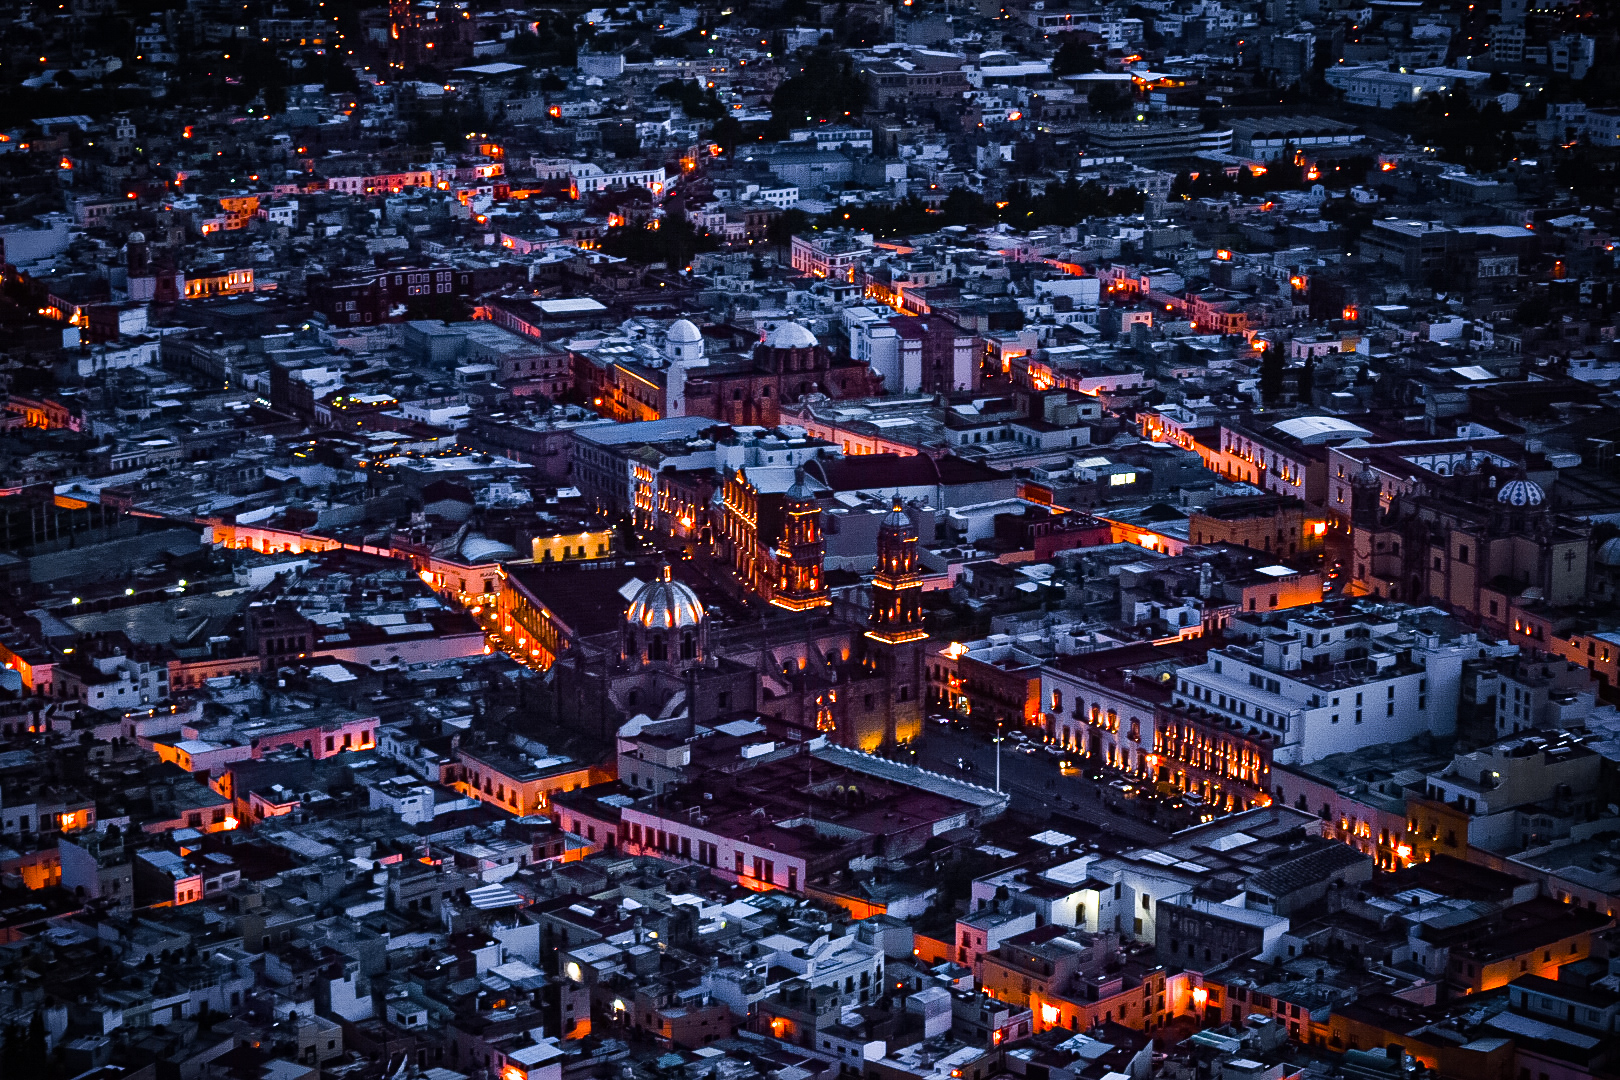 Centro Histótico de Zacatecas